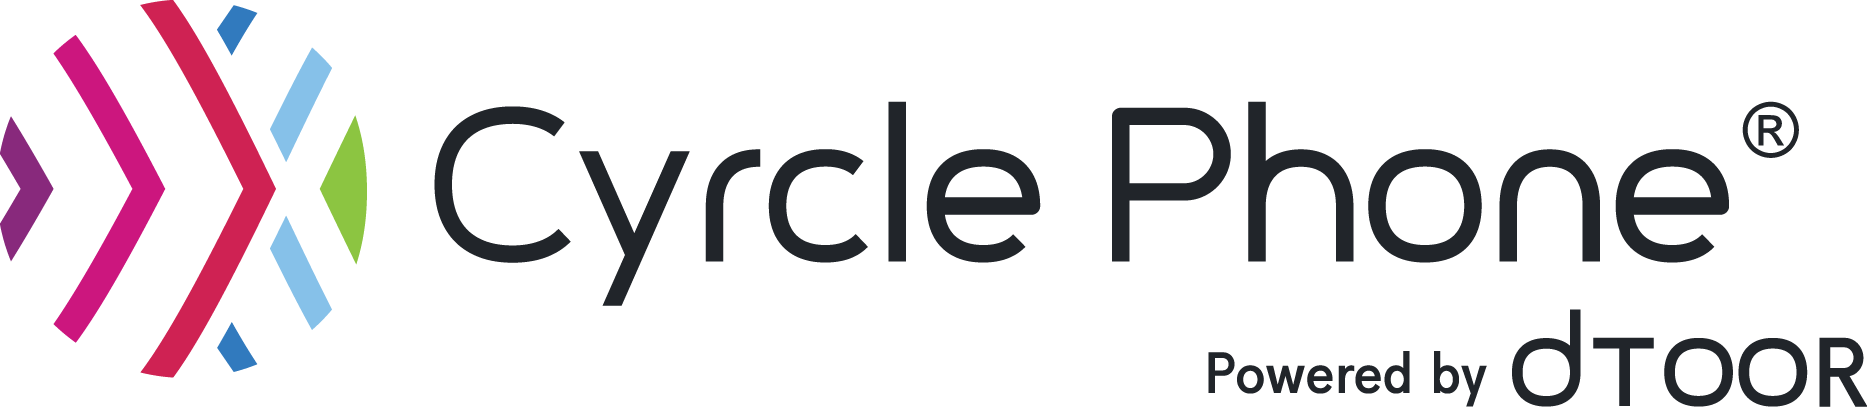 Cyrcle Phone logo